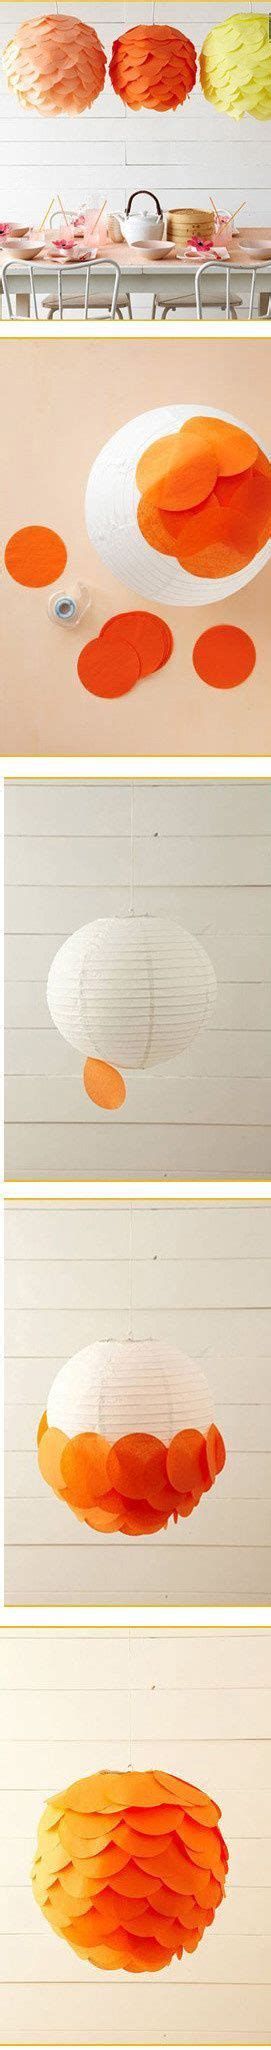 15 Creative Diy Paper Lanterns Ideas To Brighten Your Home Paper